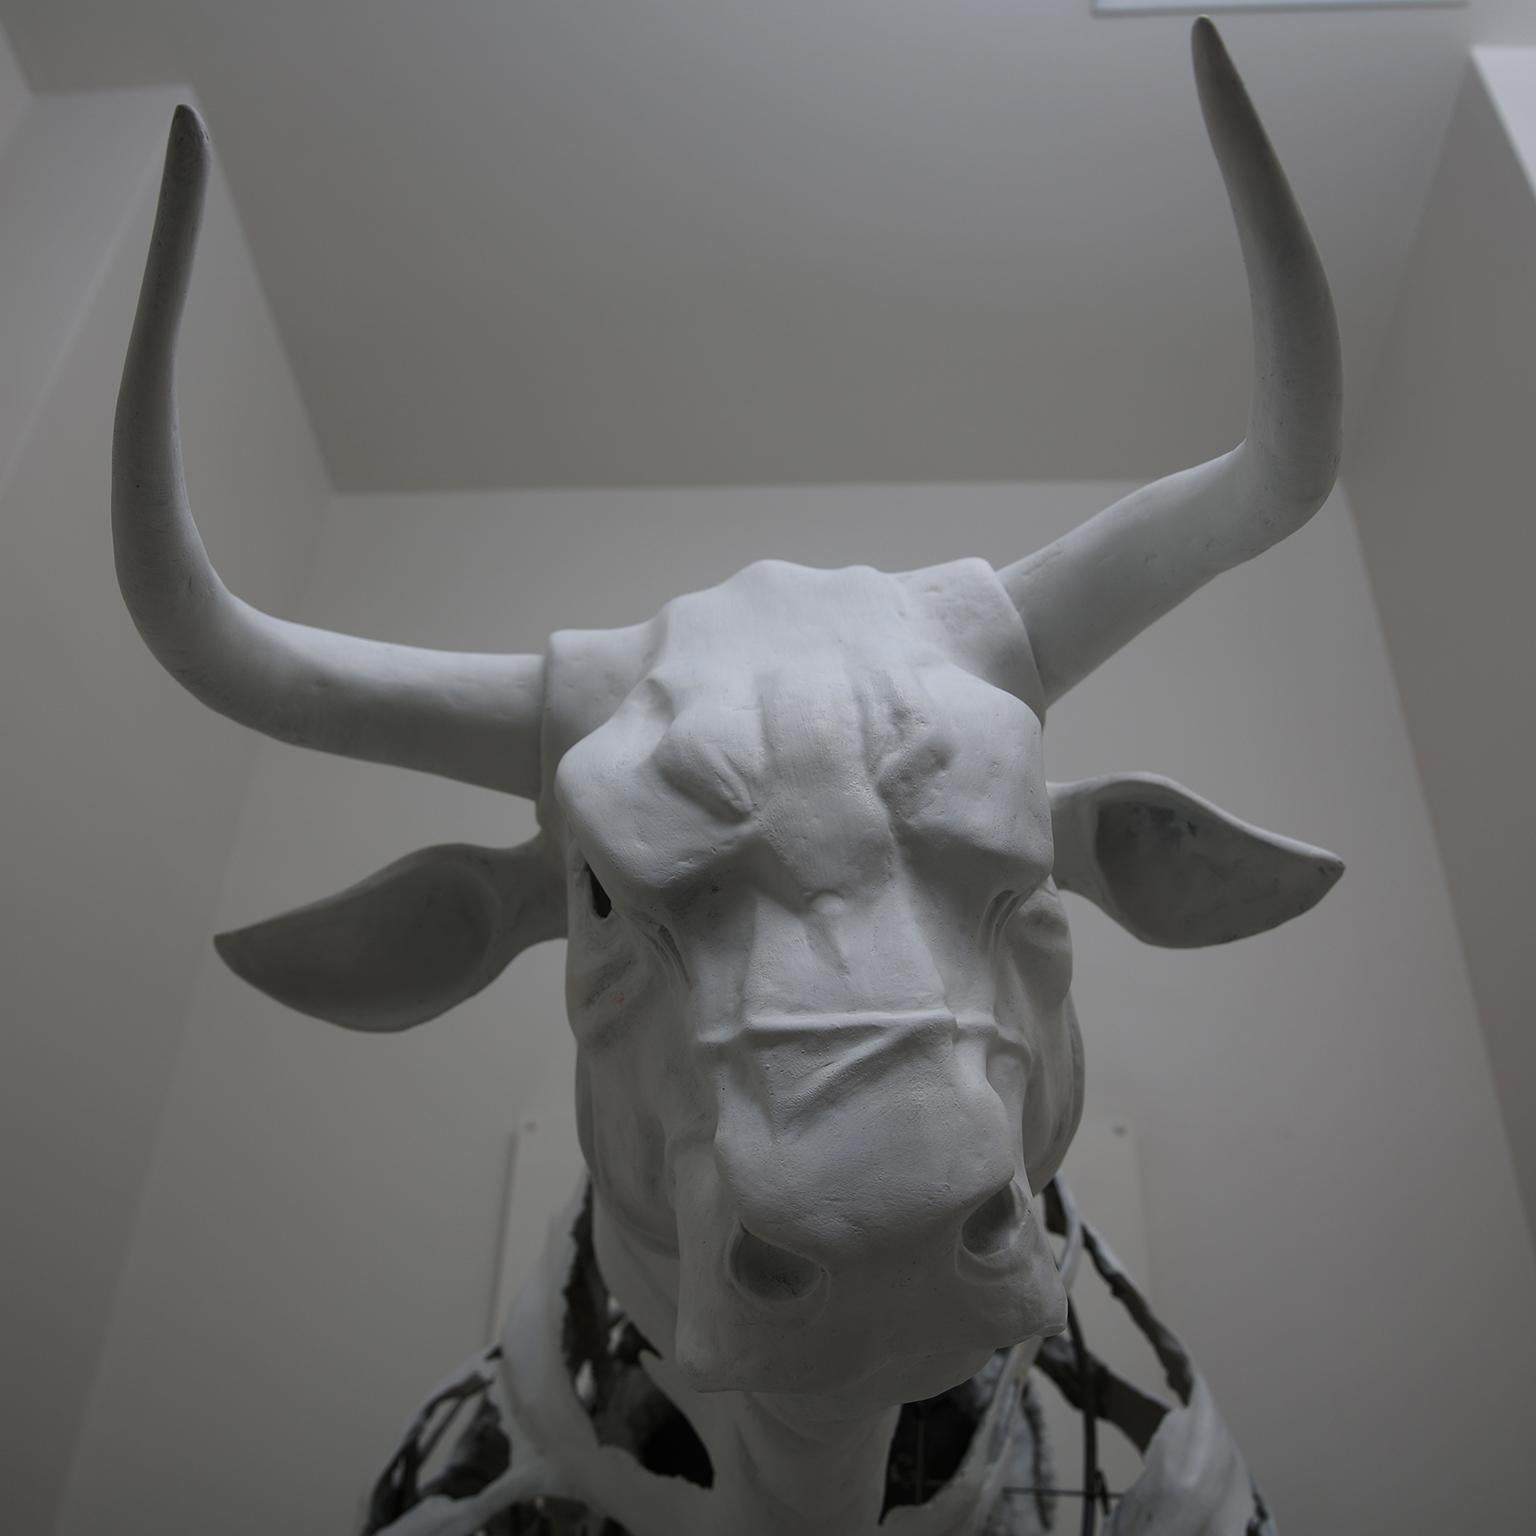 The Bull by Hobbes Vincent. White plaster and steel sculpture. Bull Bear Market 6